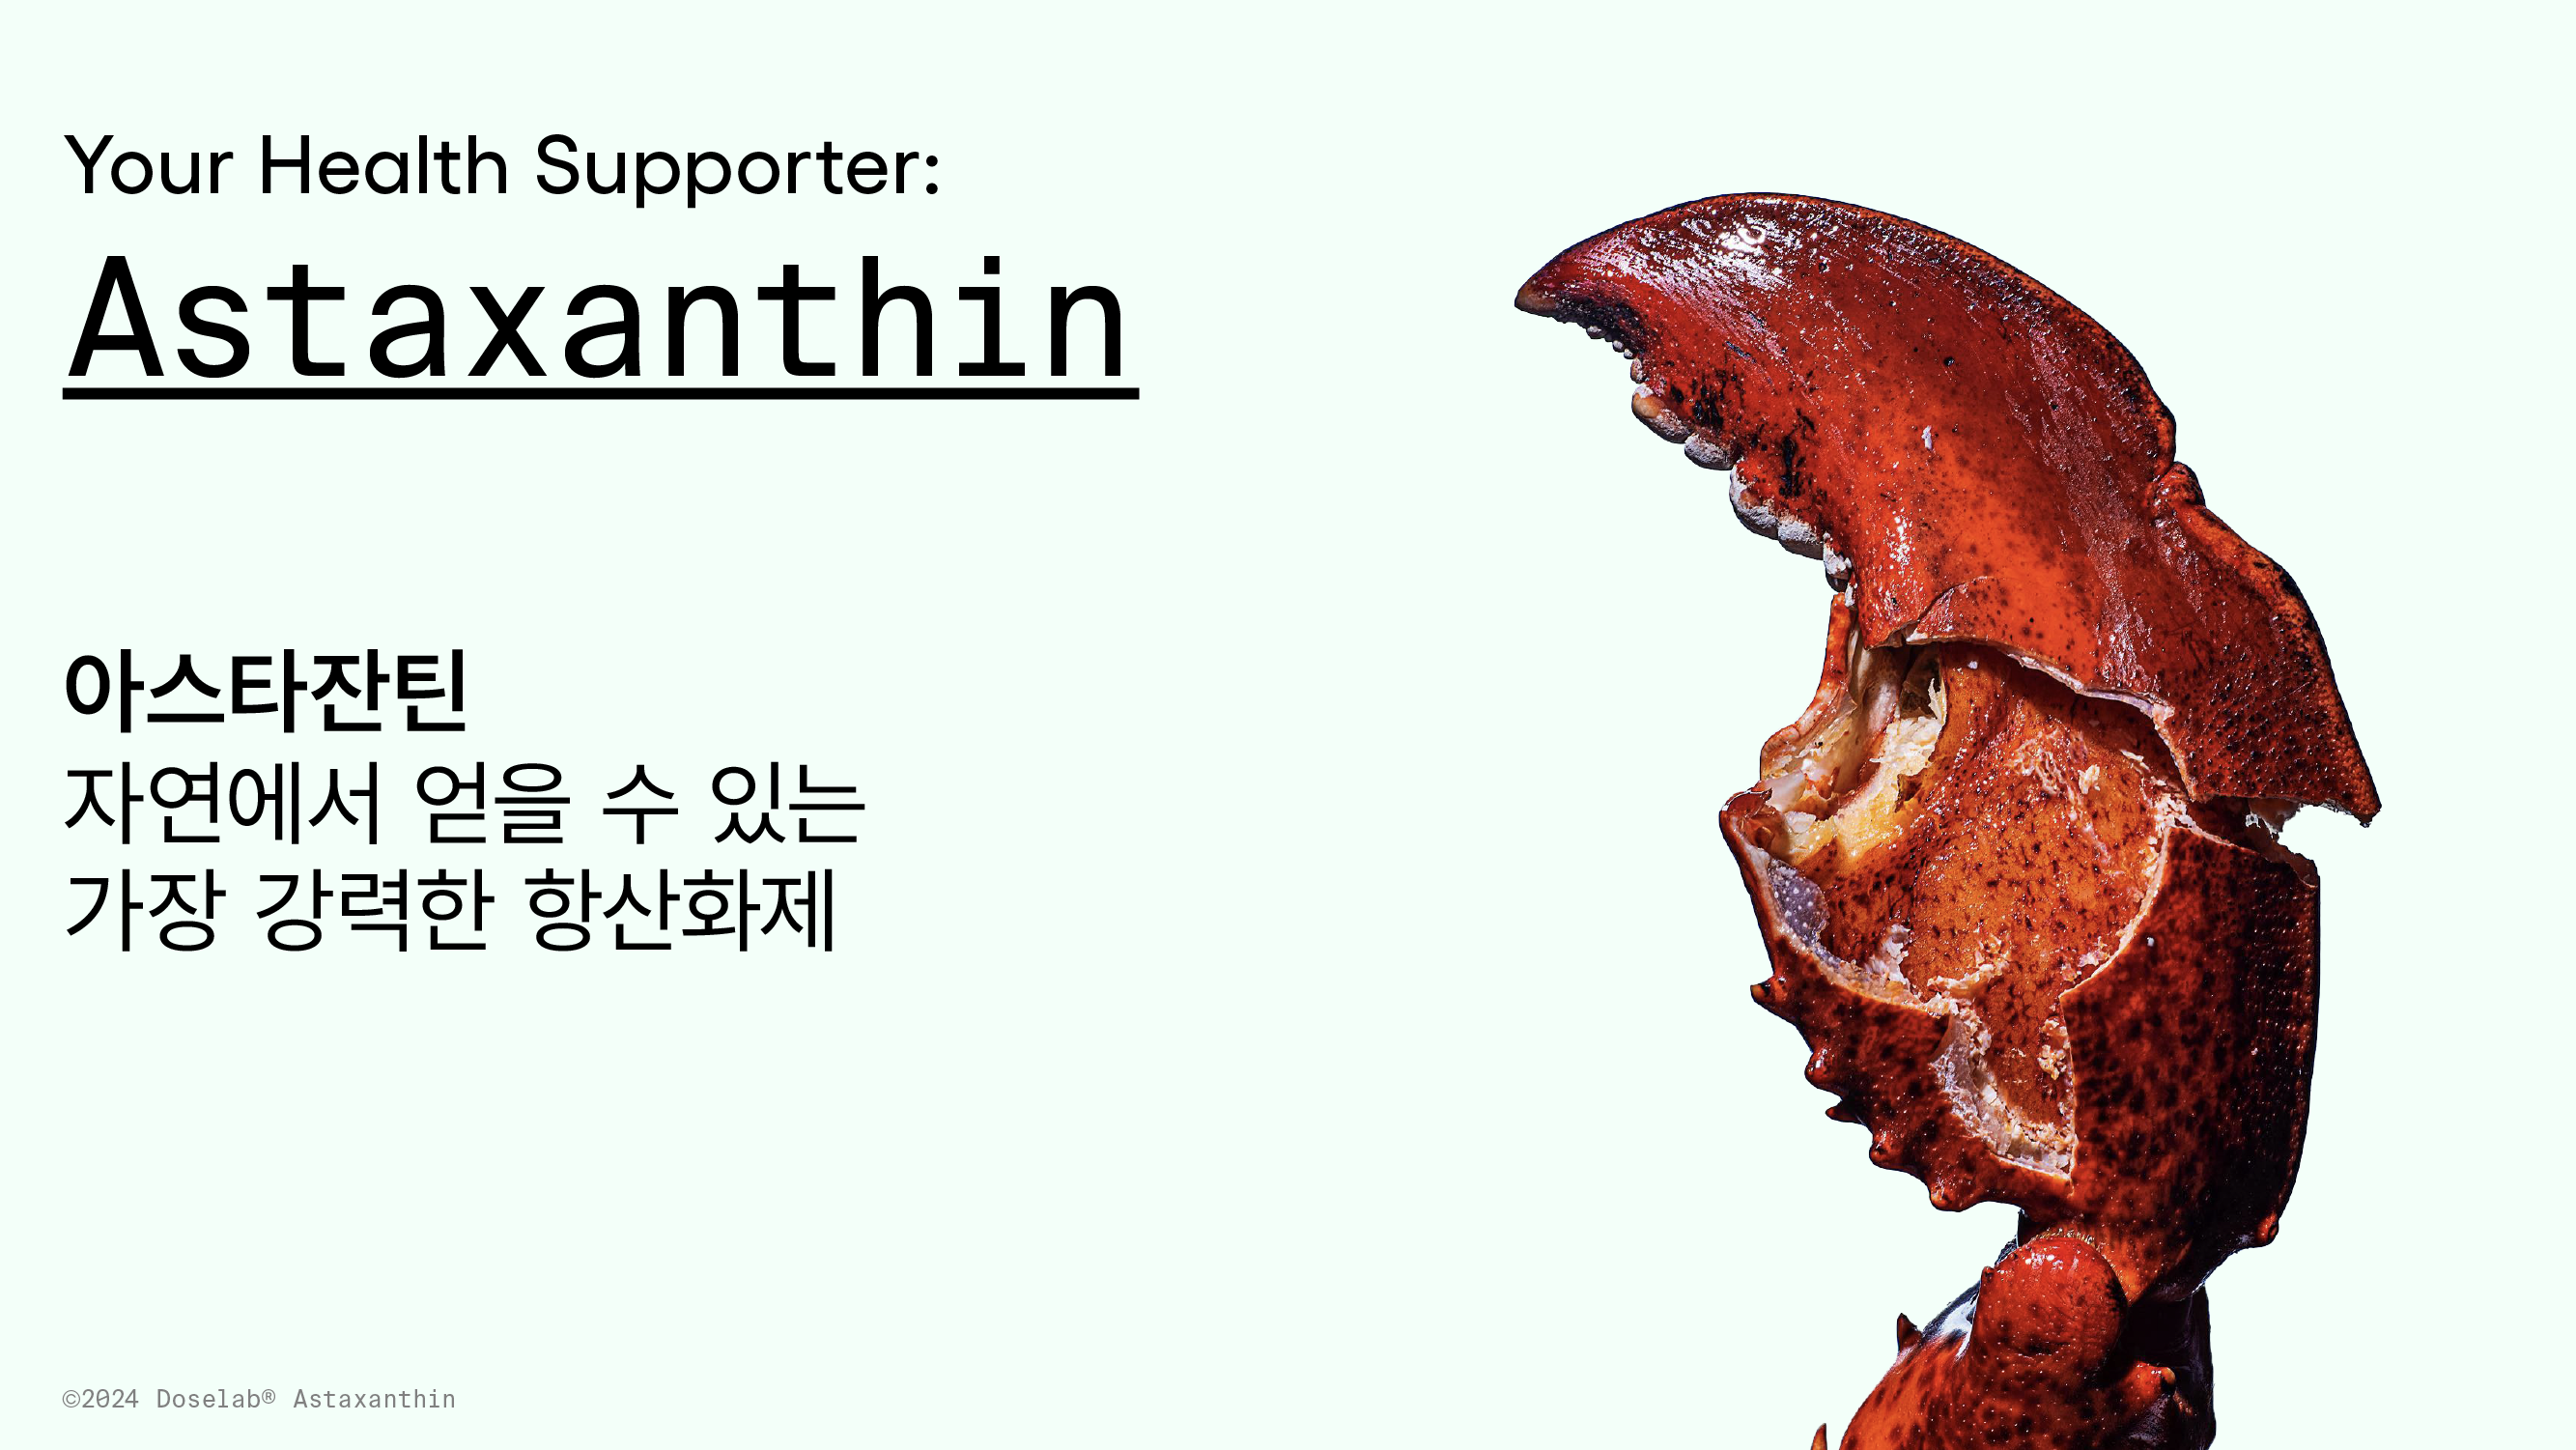 Your Health Supporter: Astaxanthin